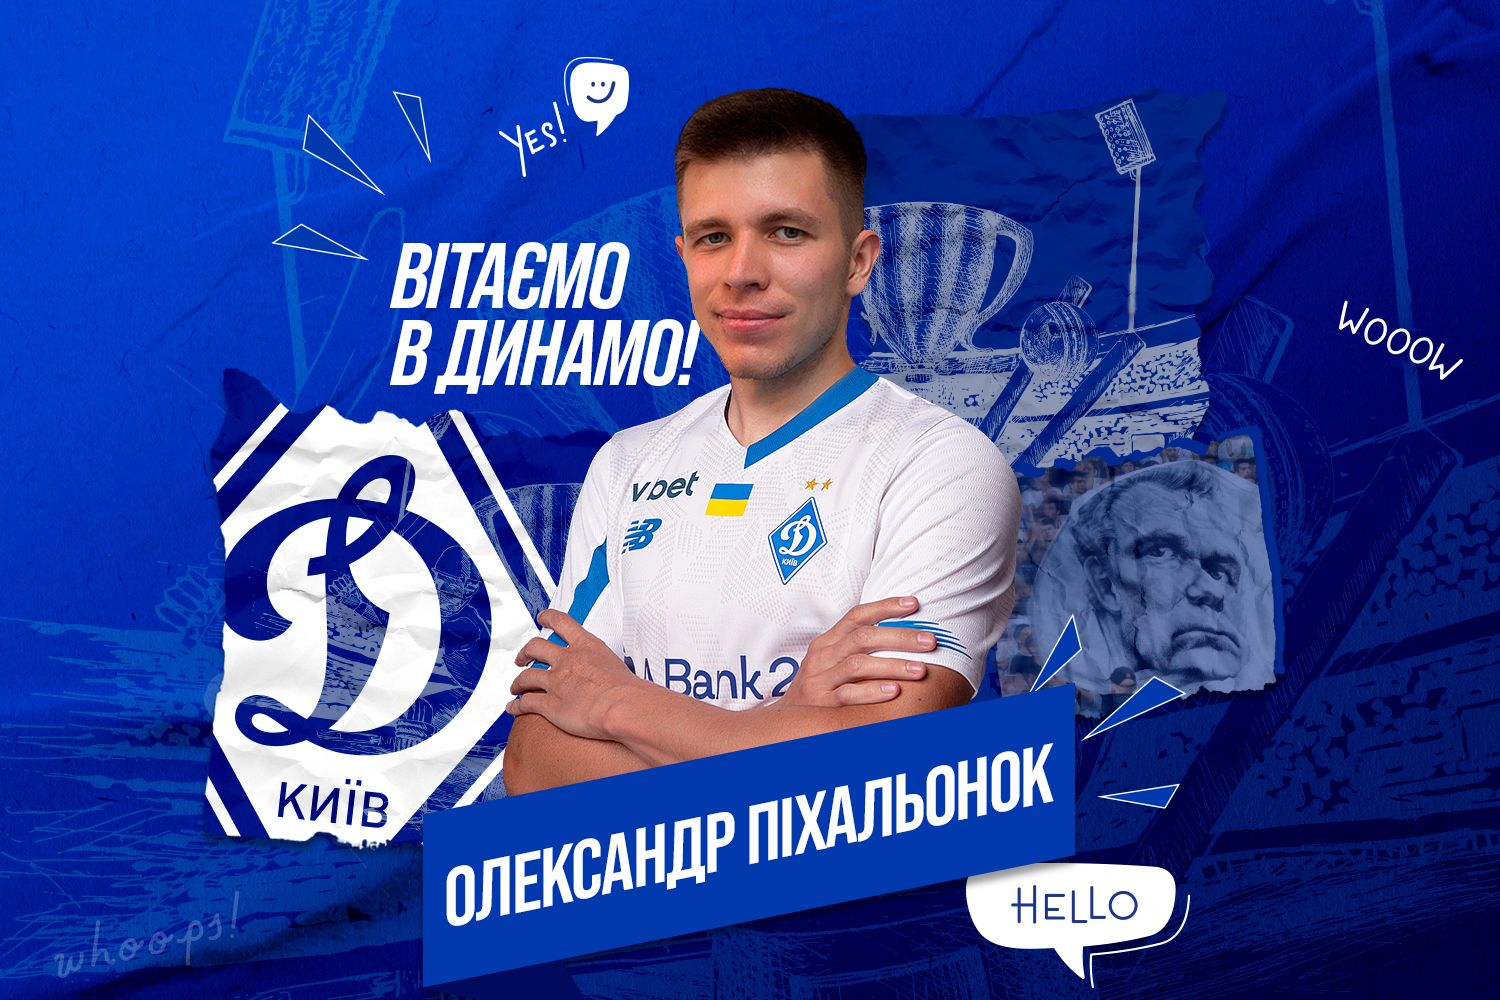 Oleksandr Pikhalionok – Dynamo player!